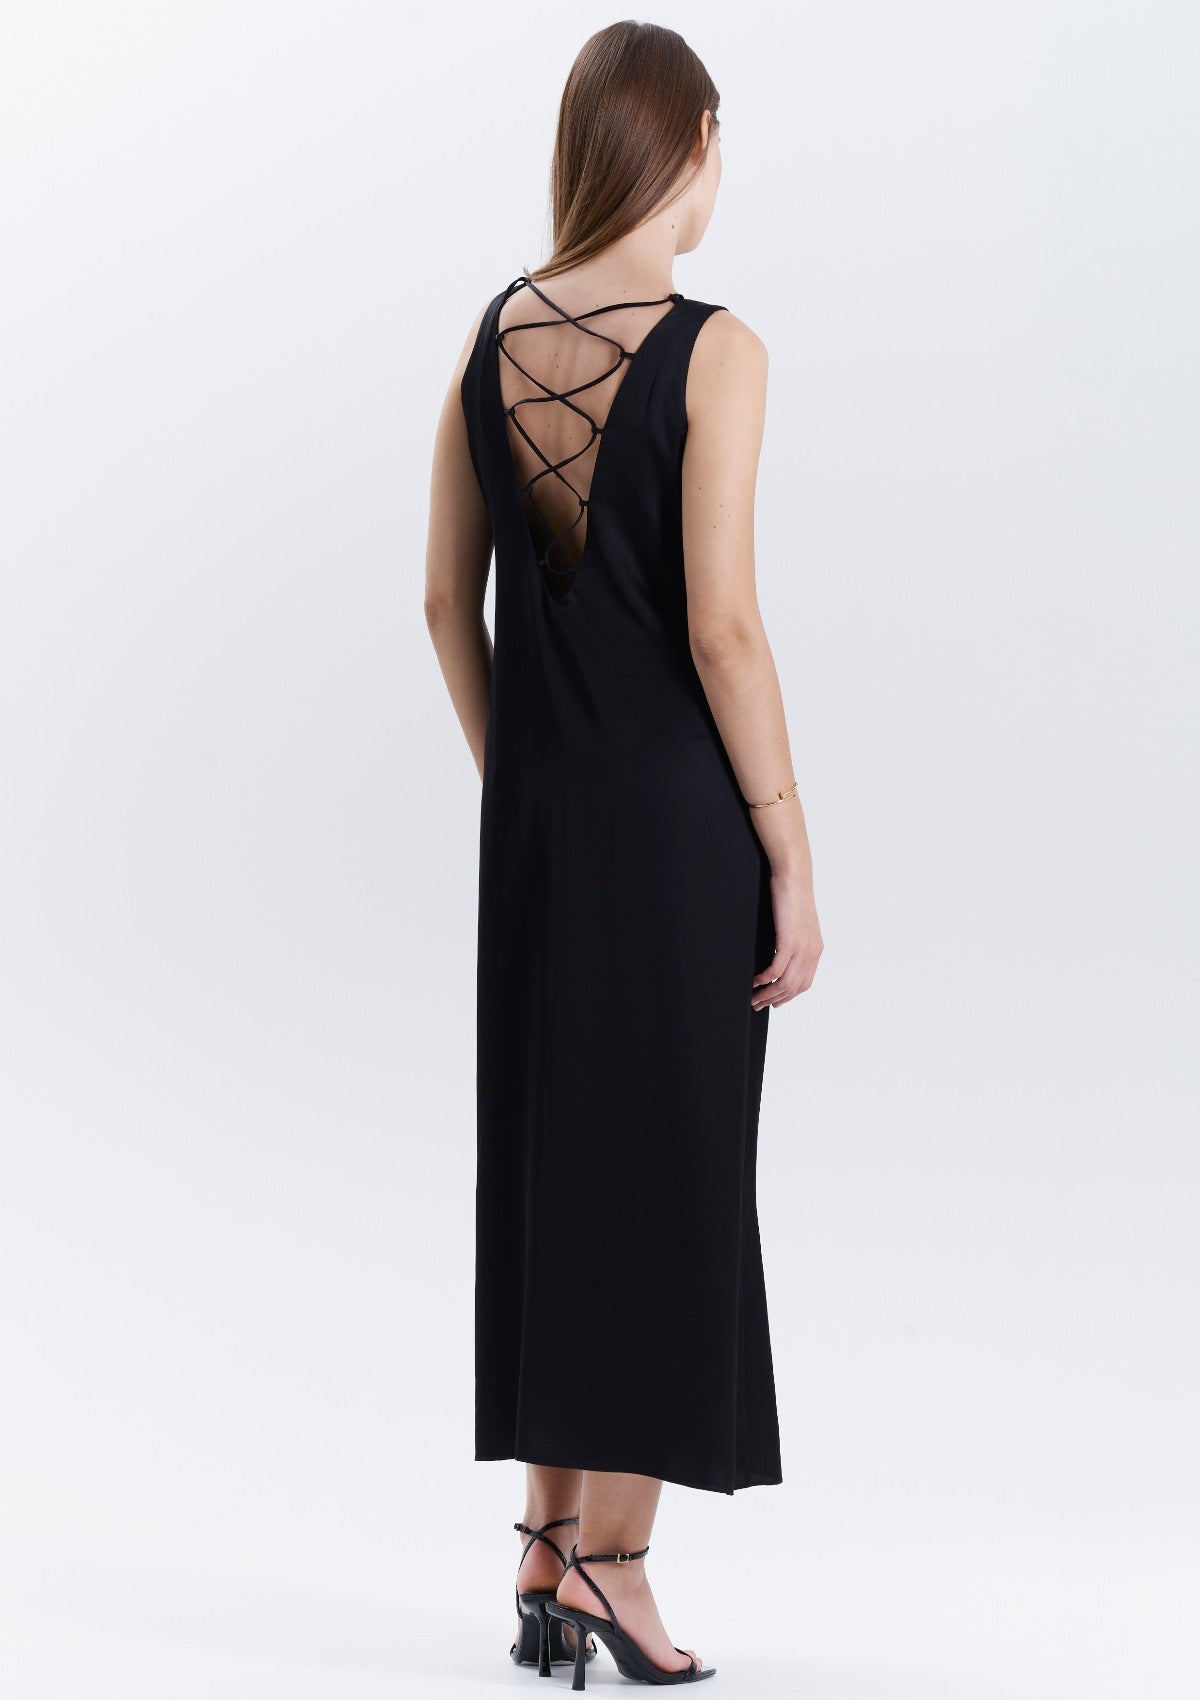 stunning-low-back-black-dress-by Silk & tonic fashion brand